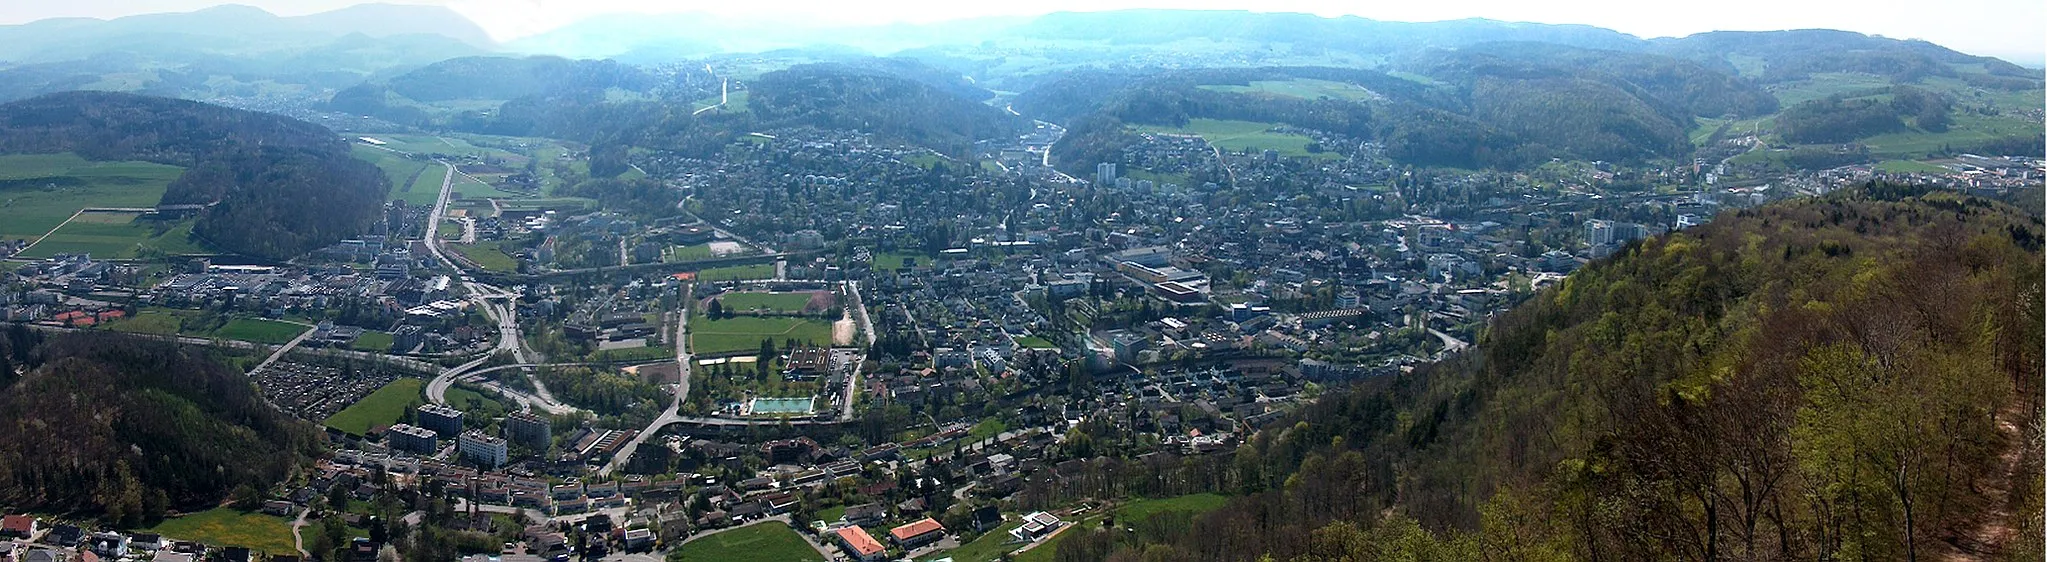 Image of Liestal